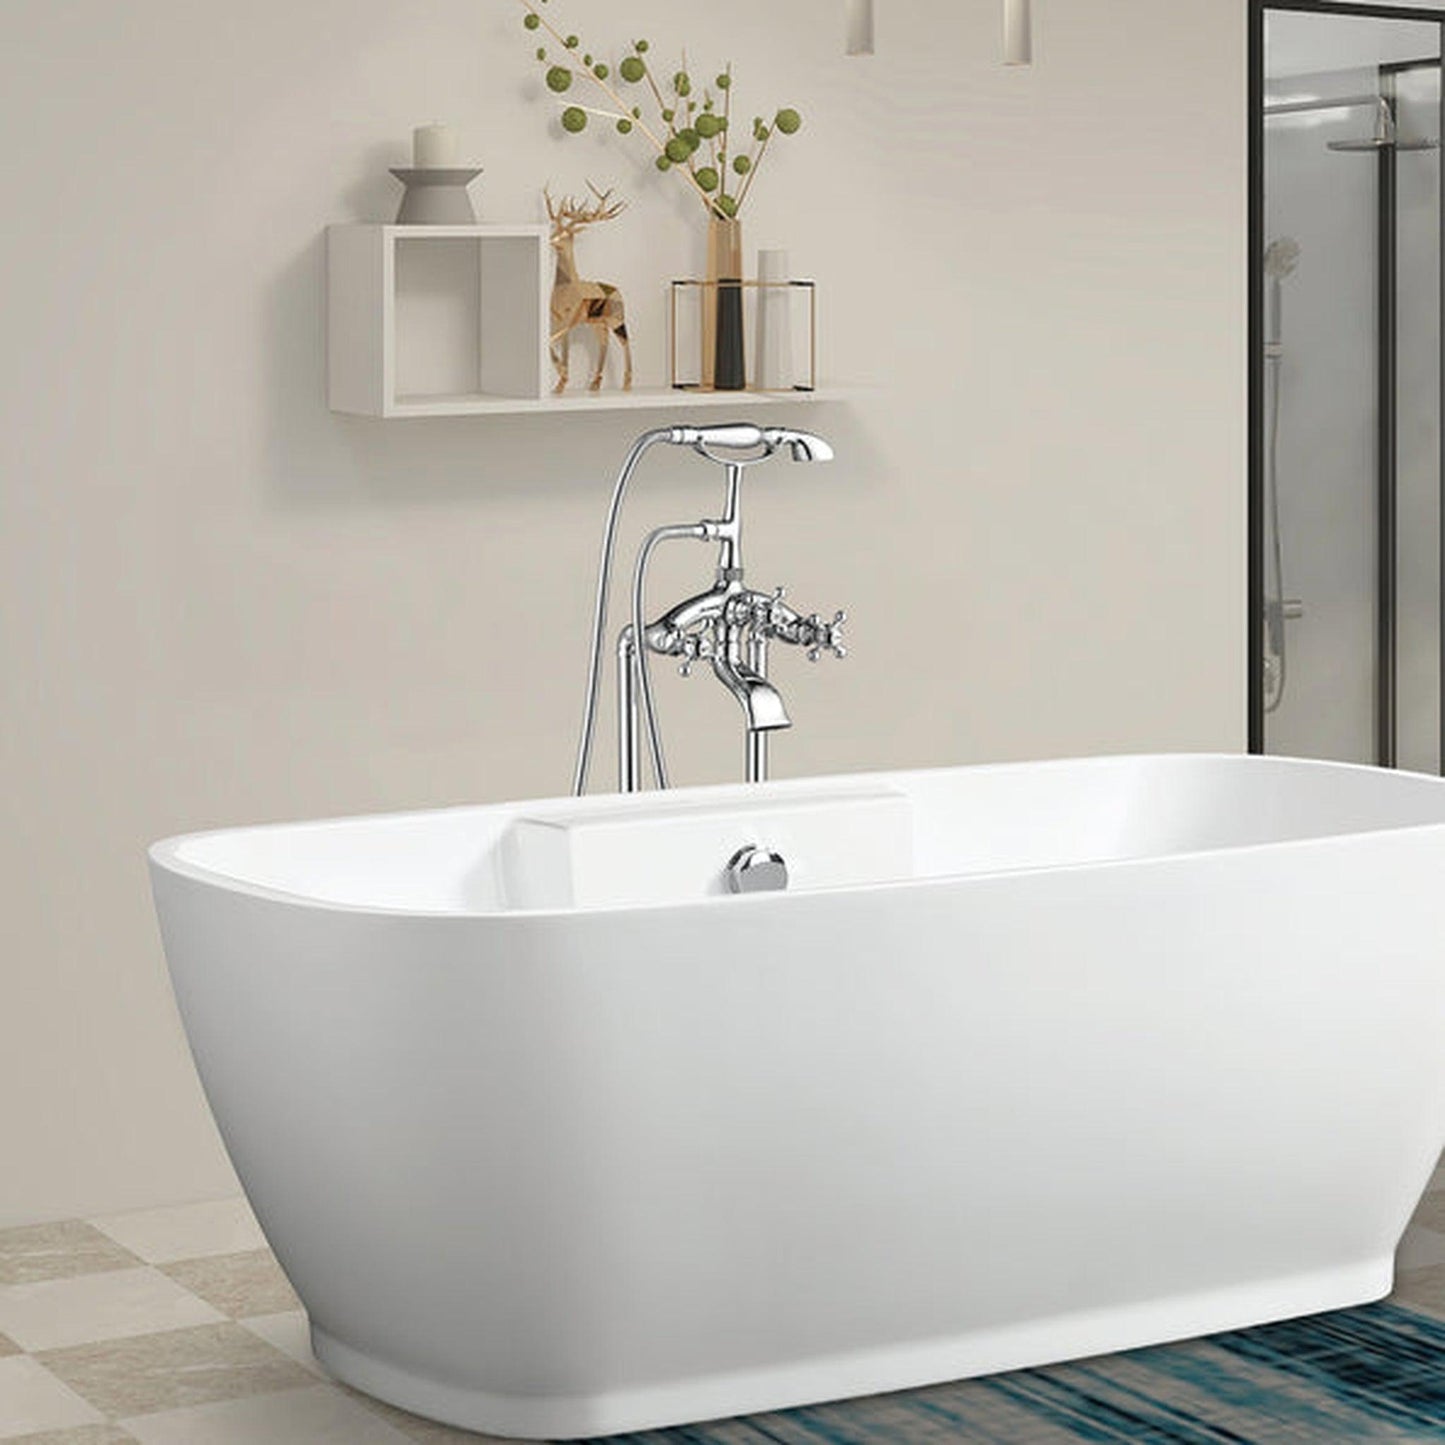 Vanity Art VA2019 40" Polished Chrome Freestanding Floor Mounted Bathtub Faucet With Handheld Shower